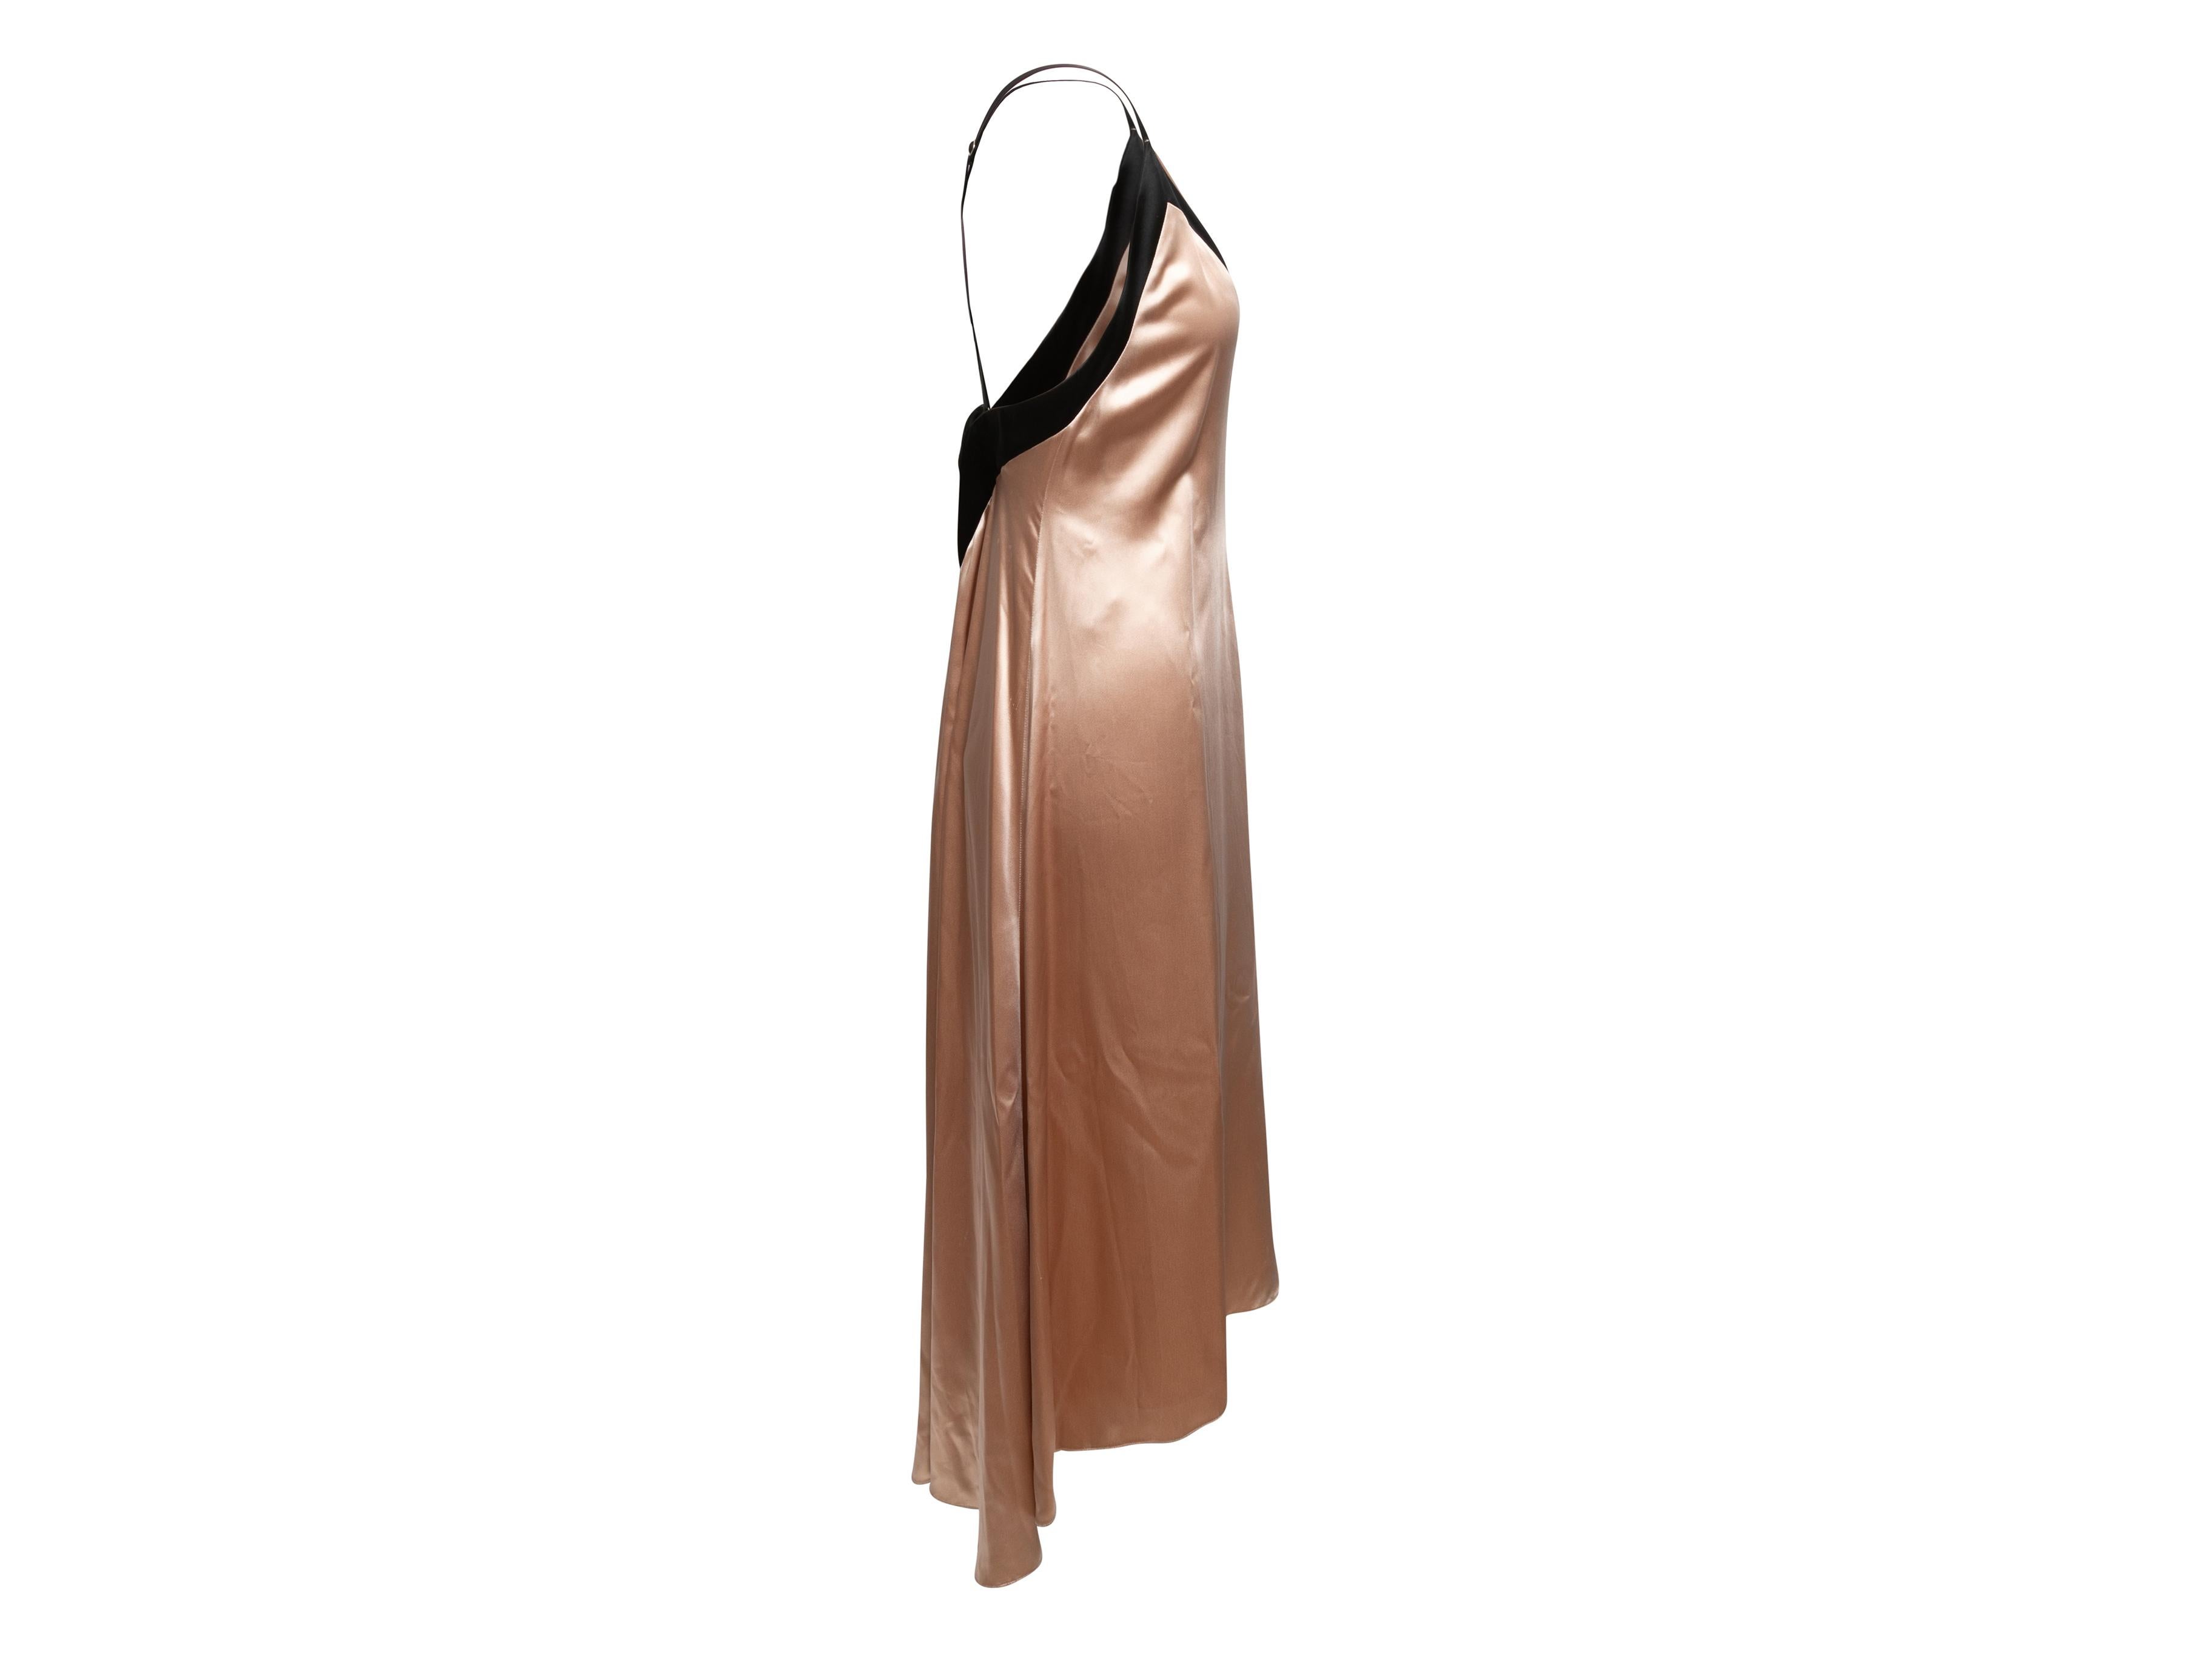 Blush and black sleeveless slip dress by Lanvin. V-neck. Narrow adjustable straps. 38